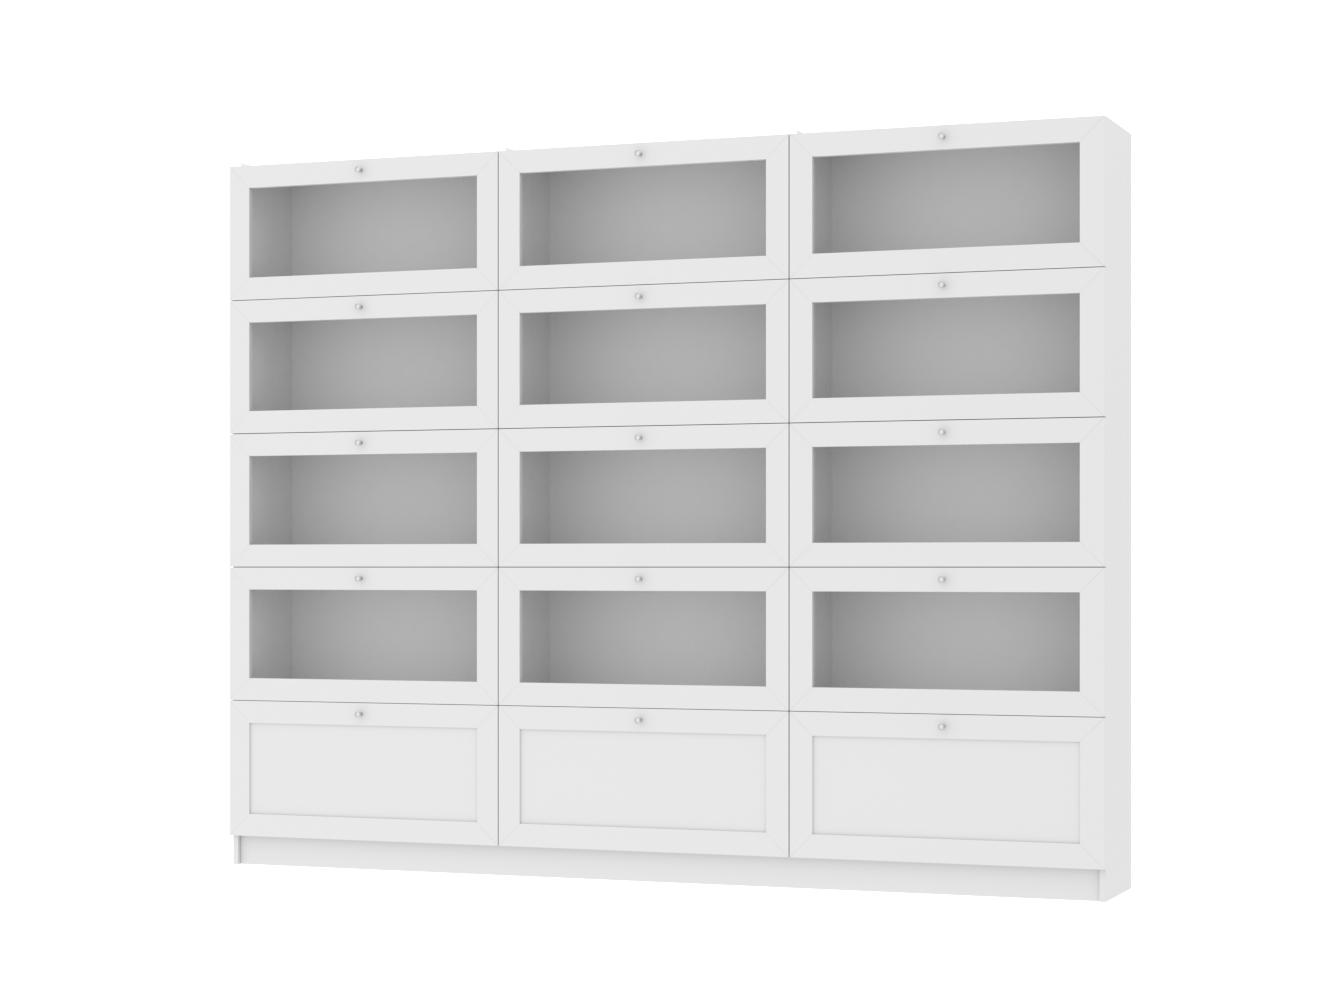  Книжный шкаф Билли 373 white ИКЕА (IKEA) изображение товара